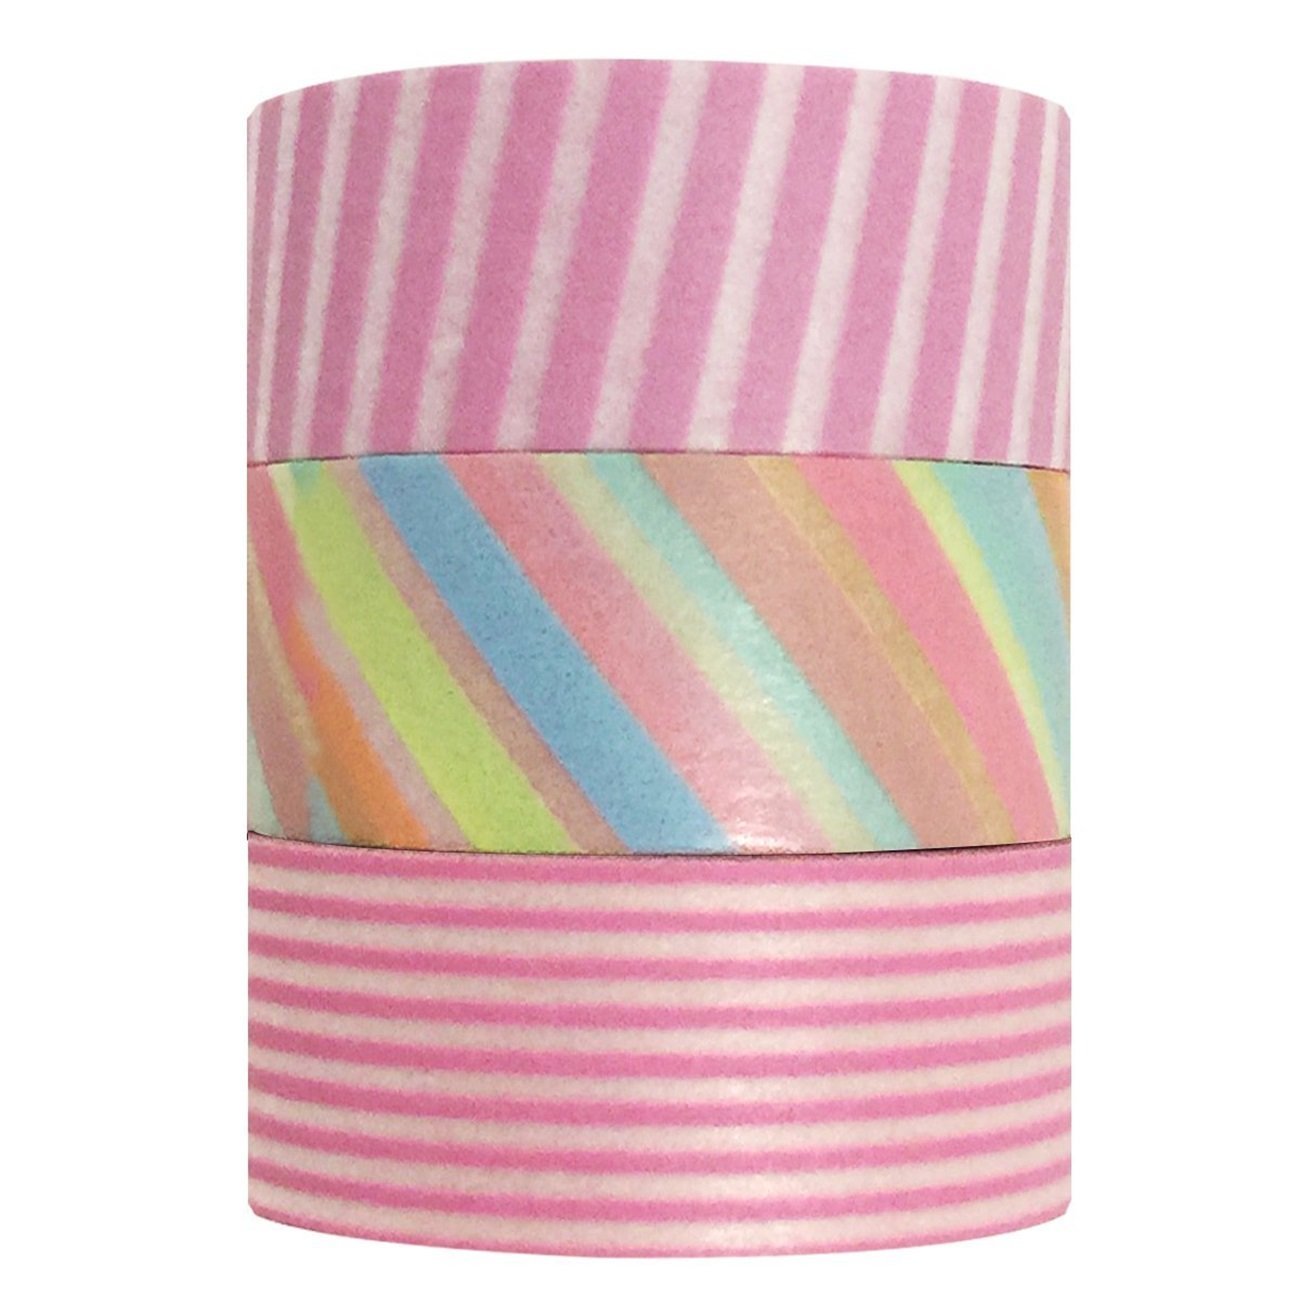 Wrapables Basic Washi Masking Tape, 10M by 15mm, Pink, Set of 3